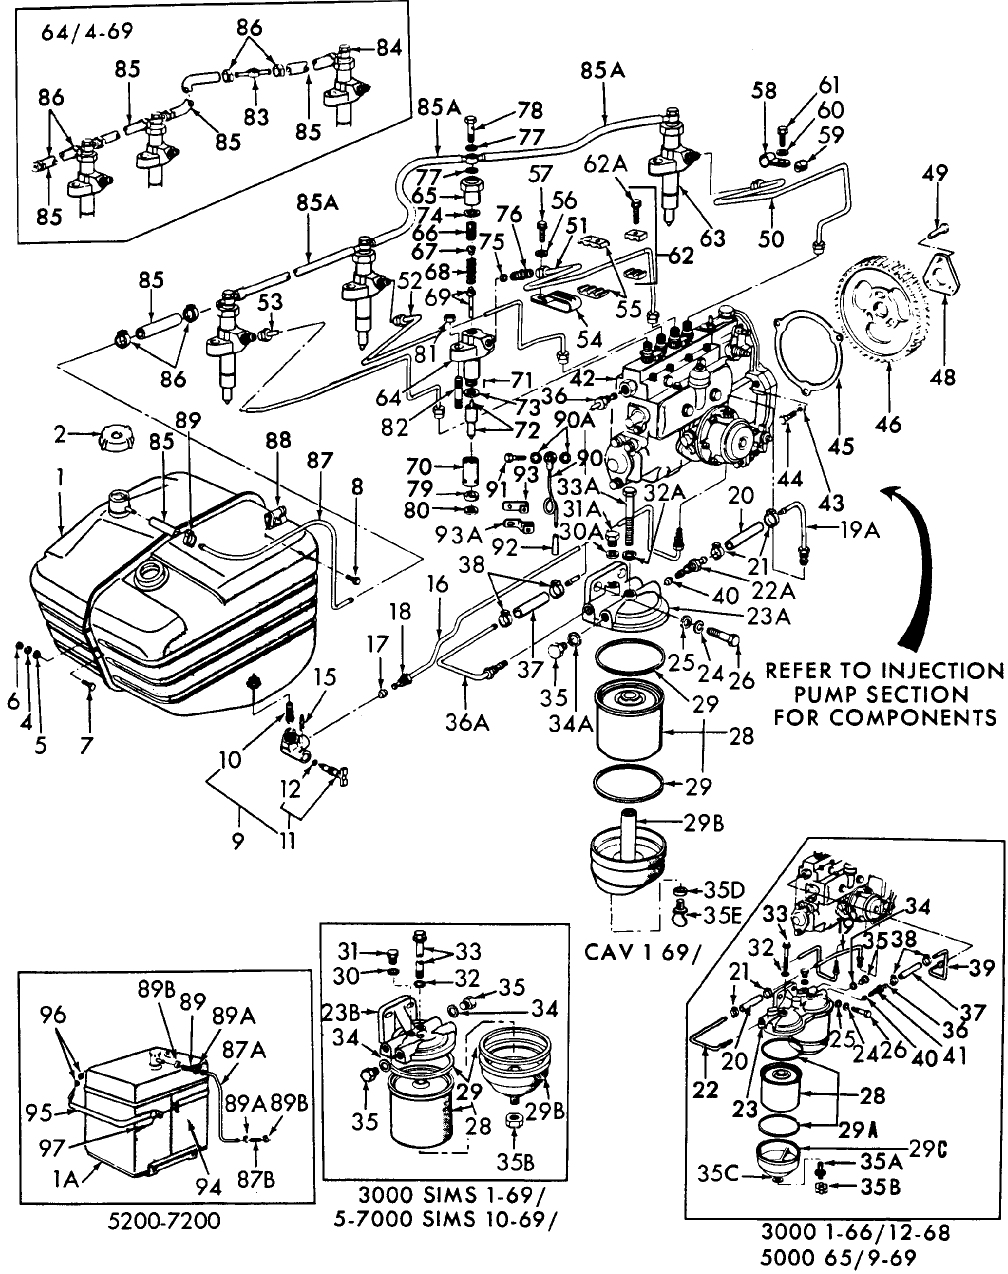 ford 555 backhoe wiring diagram